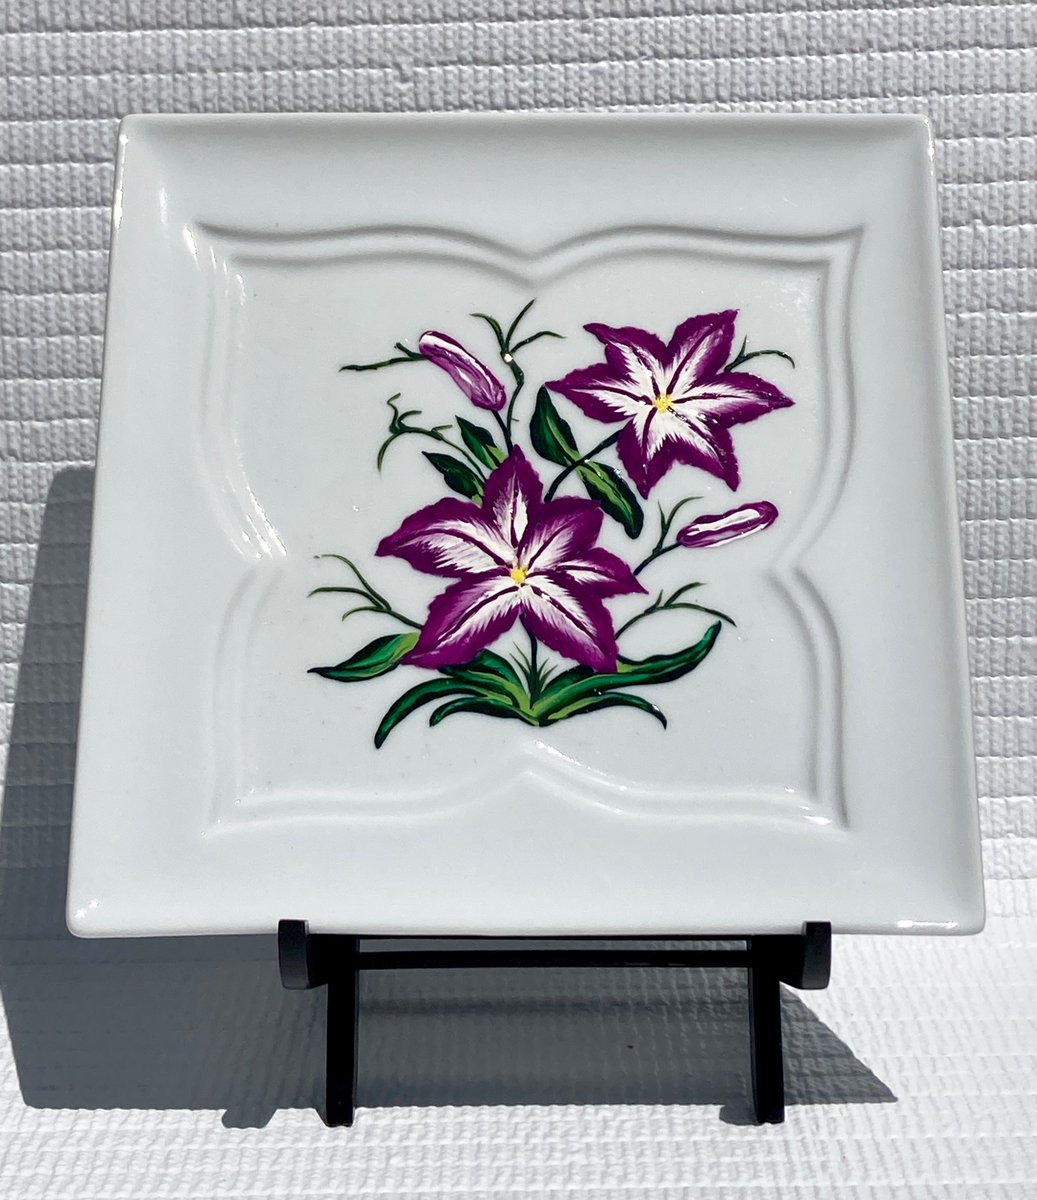 Decorative plate with flowers etsy.com/listing/969848… #plate #homedecor #decorativeplate #SMILEtt23 #CraftBizParty #gifts #housewarminggift #etsyshop